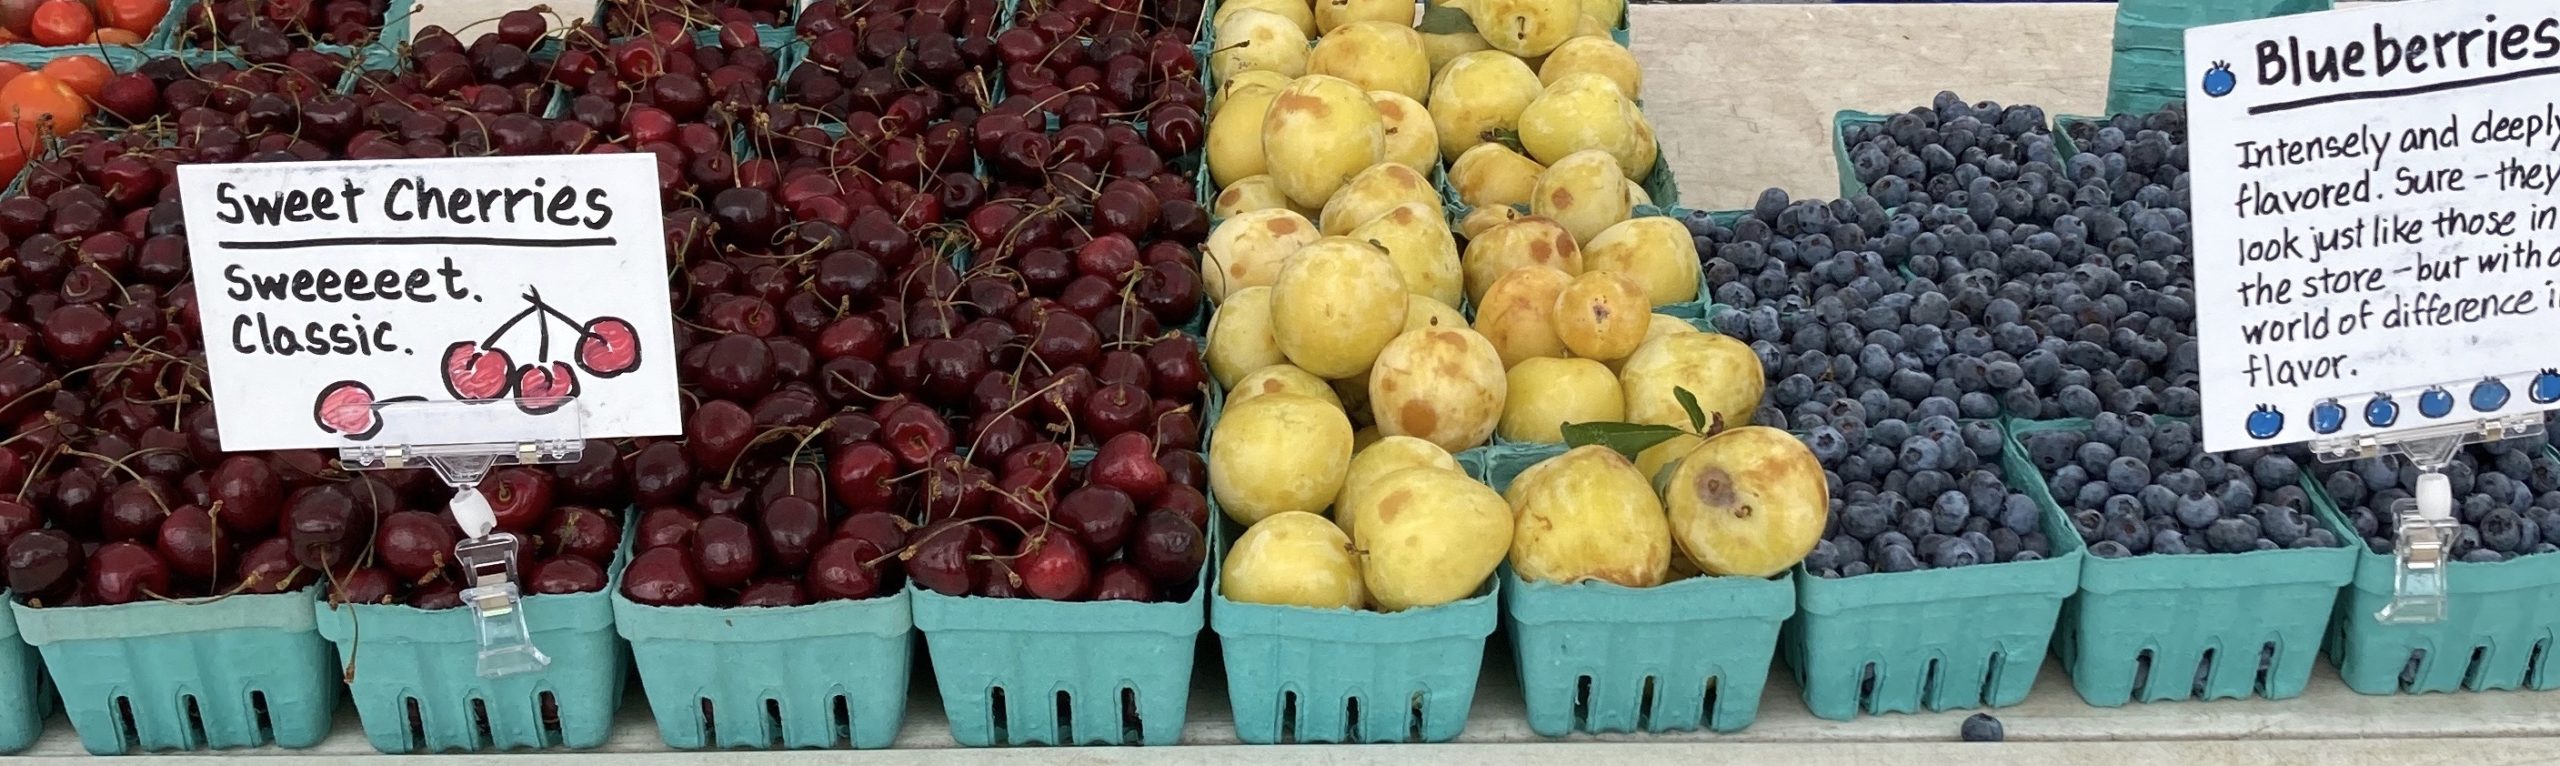 climate-friendly farmers market berries